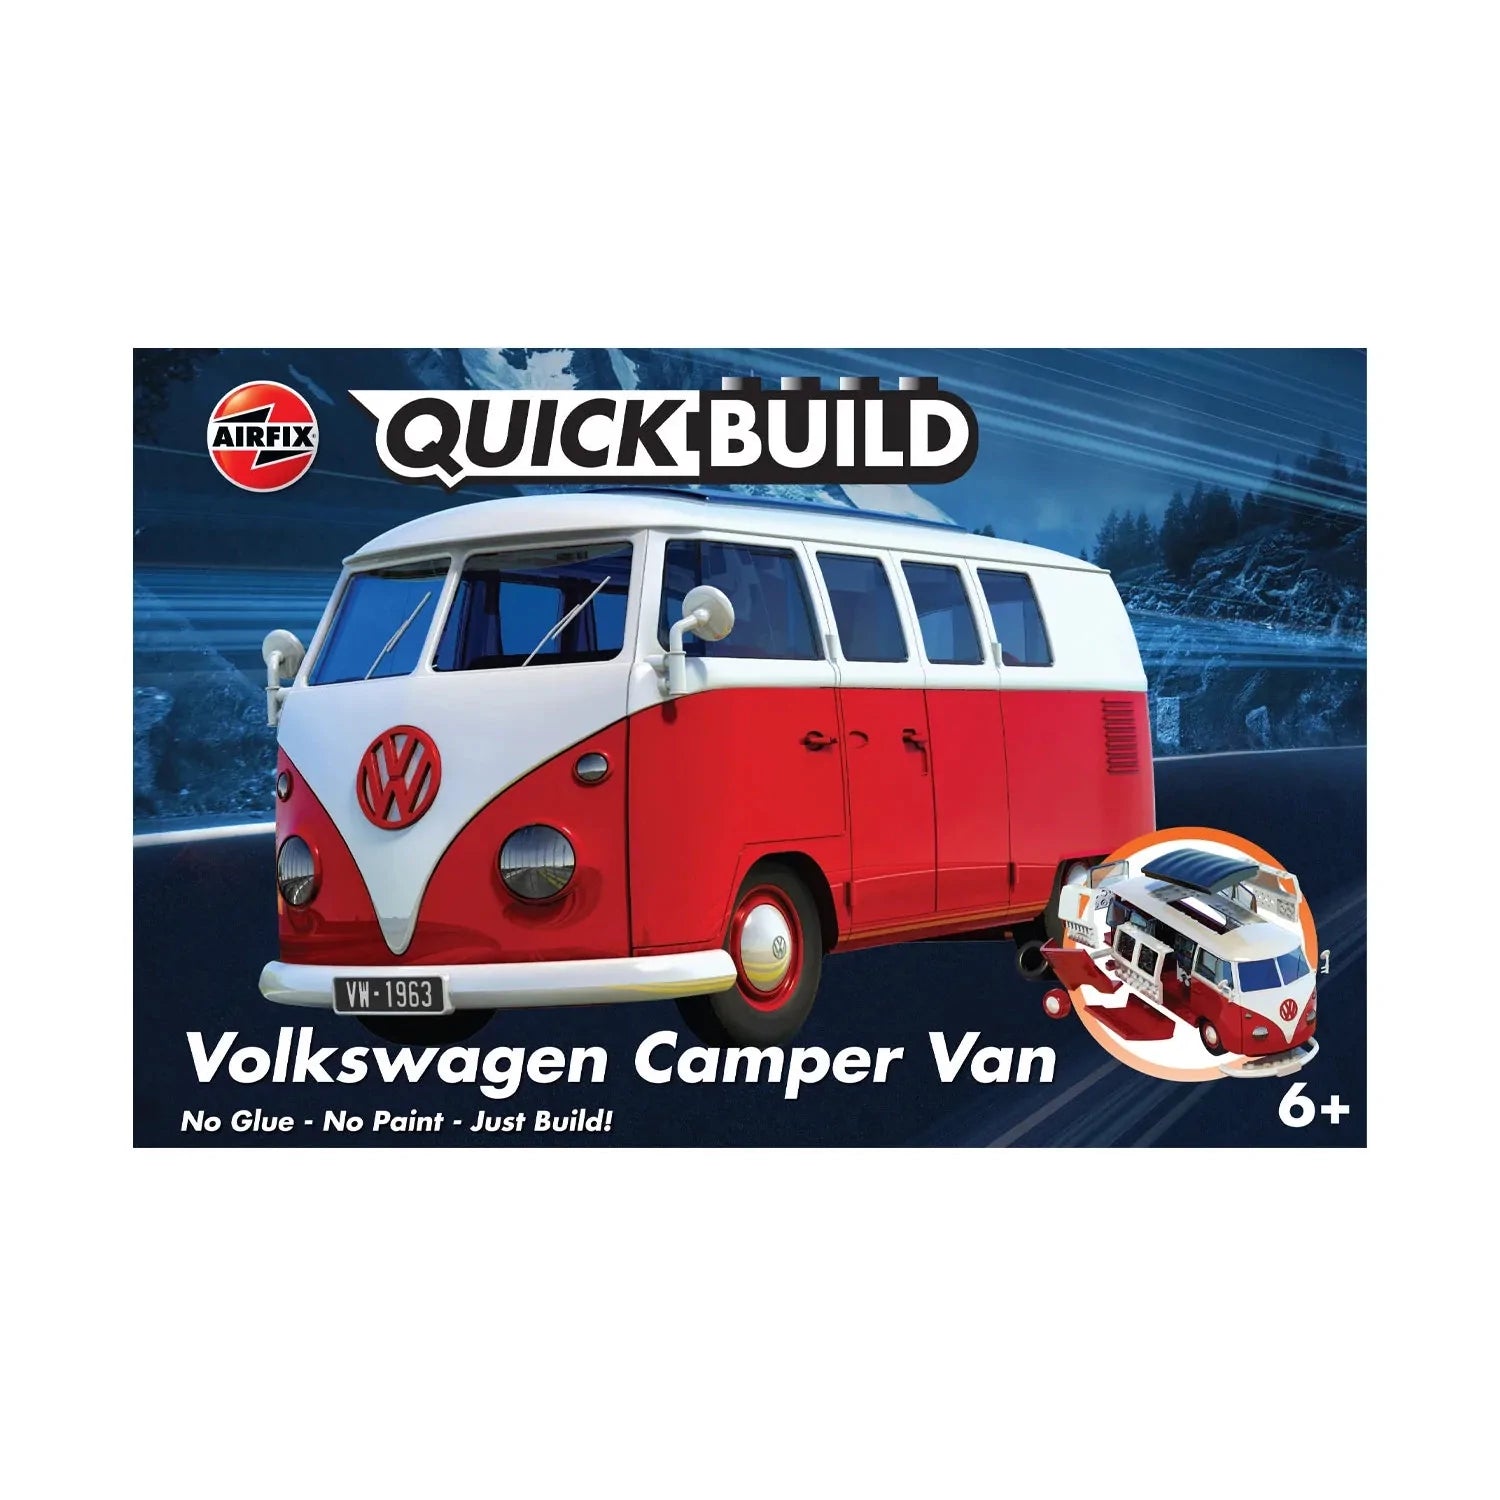 Airfix Quickbuild VW Camper Van - Red - New